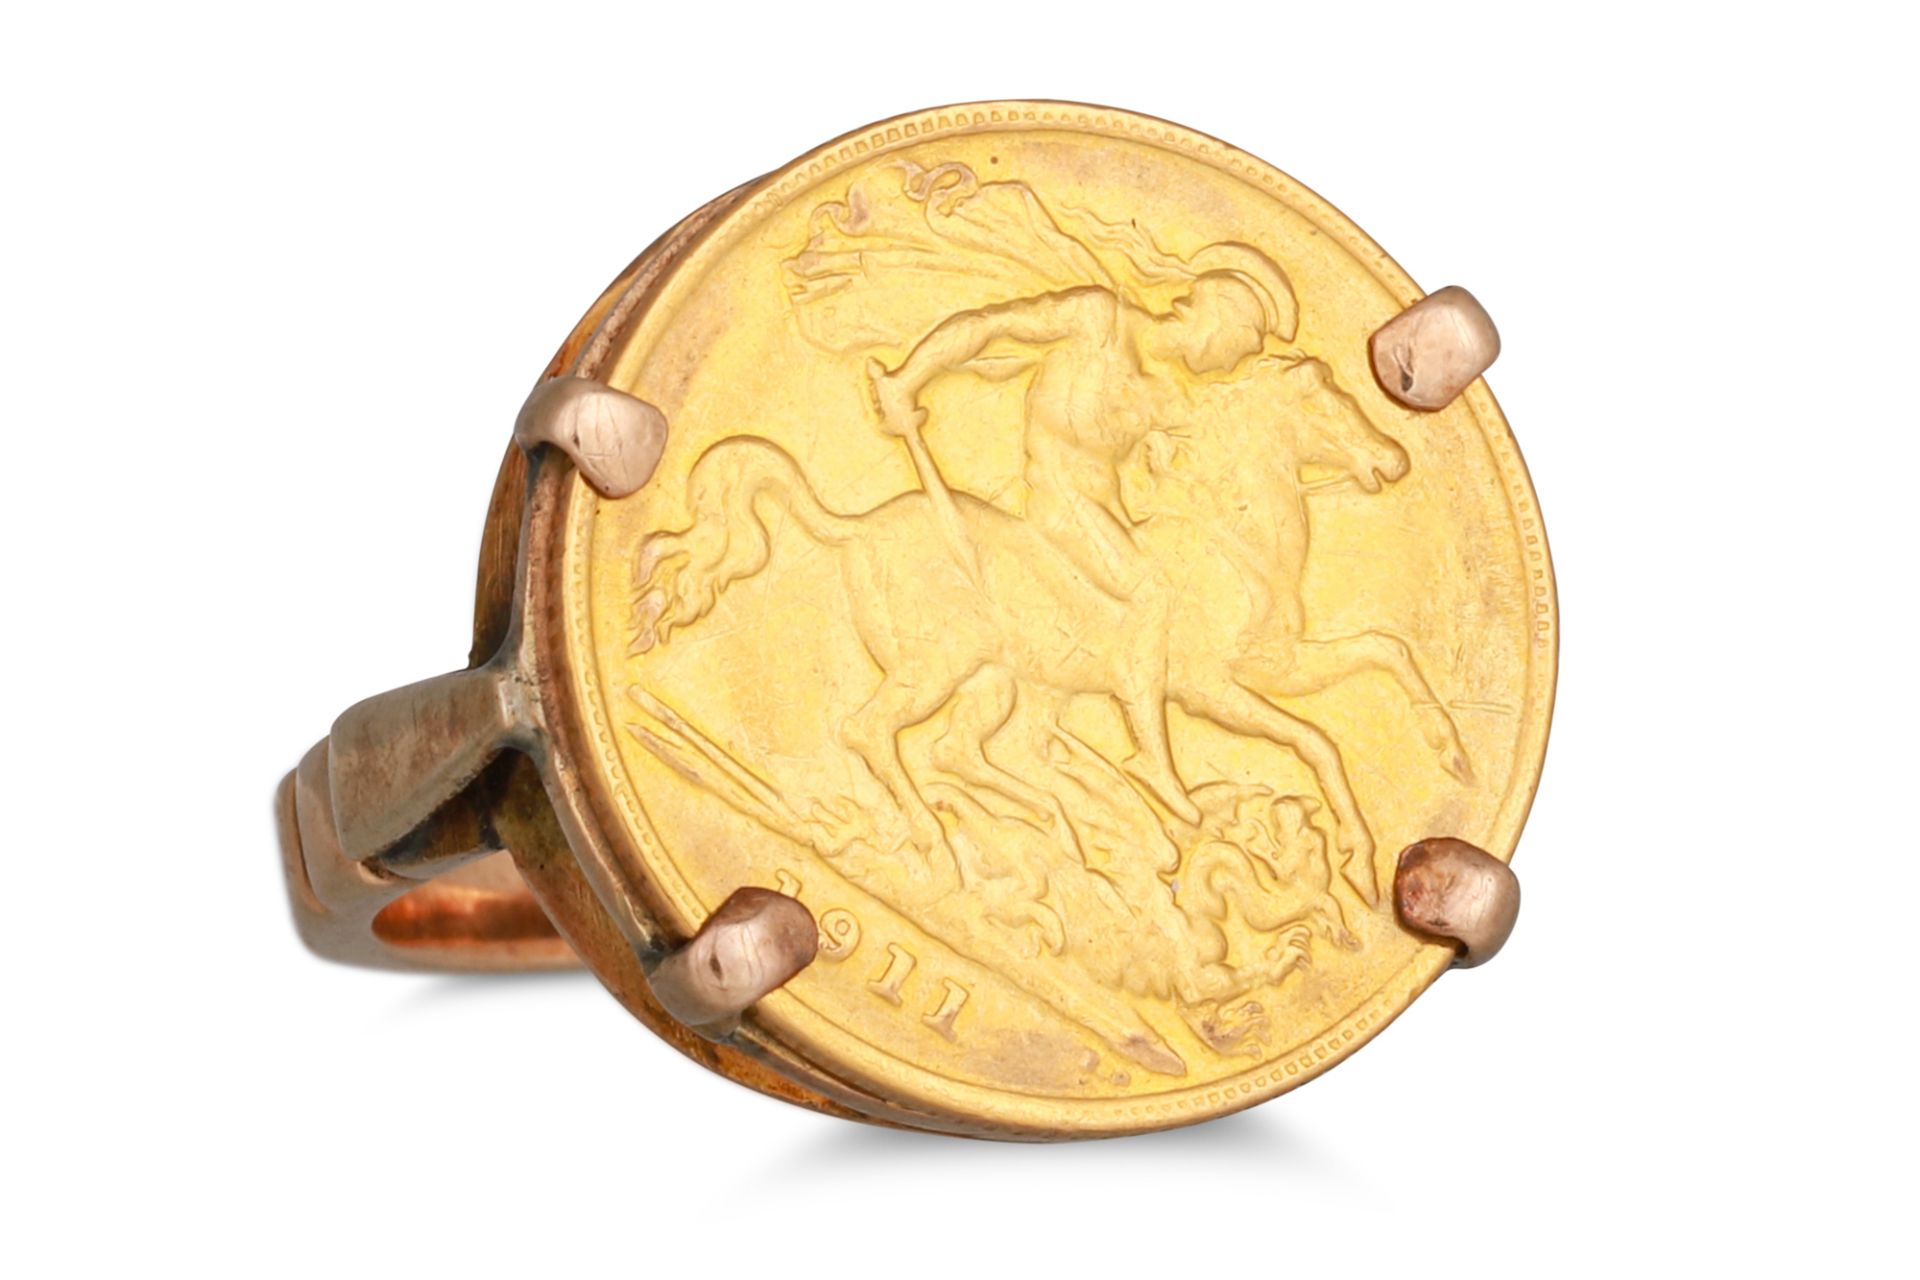 A GV HALF GOLD SOVEREIGN ENGLISH COIN RING, 1911 GF, 9.1 g. including ring